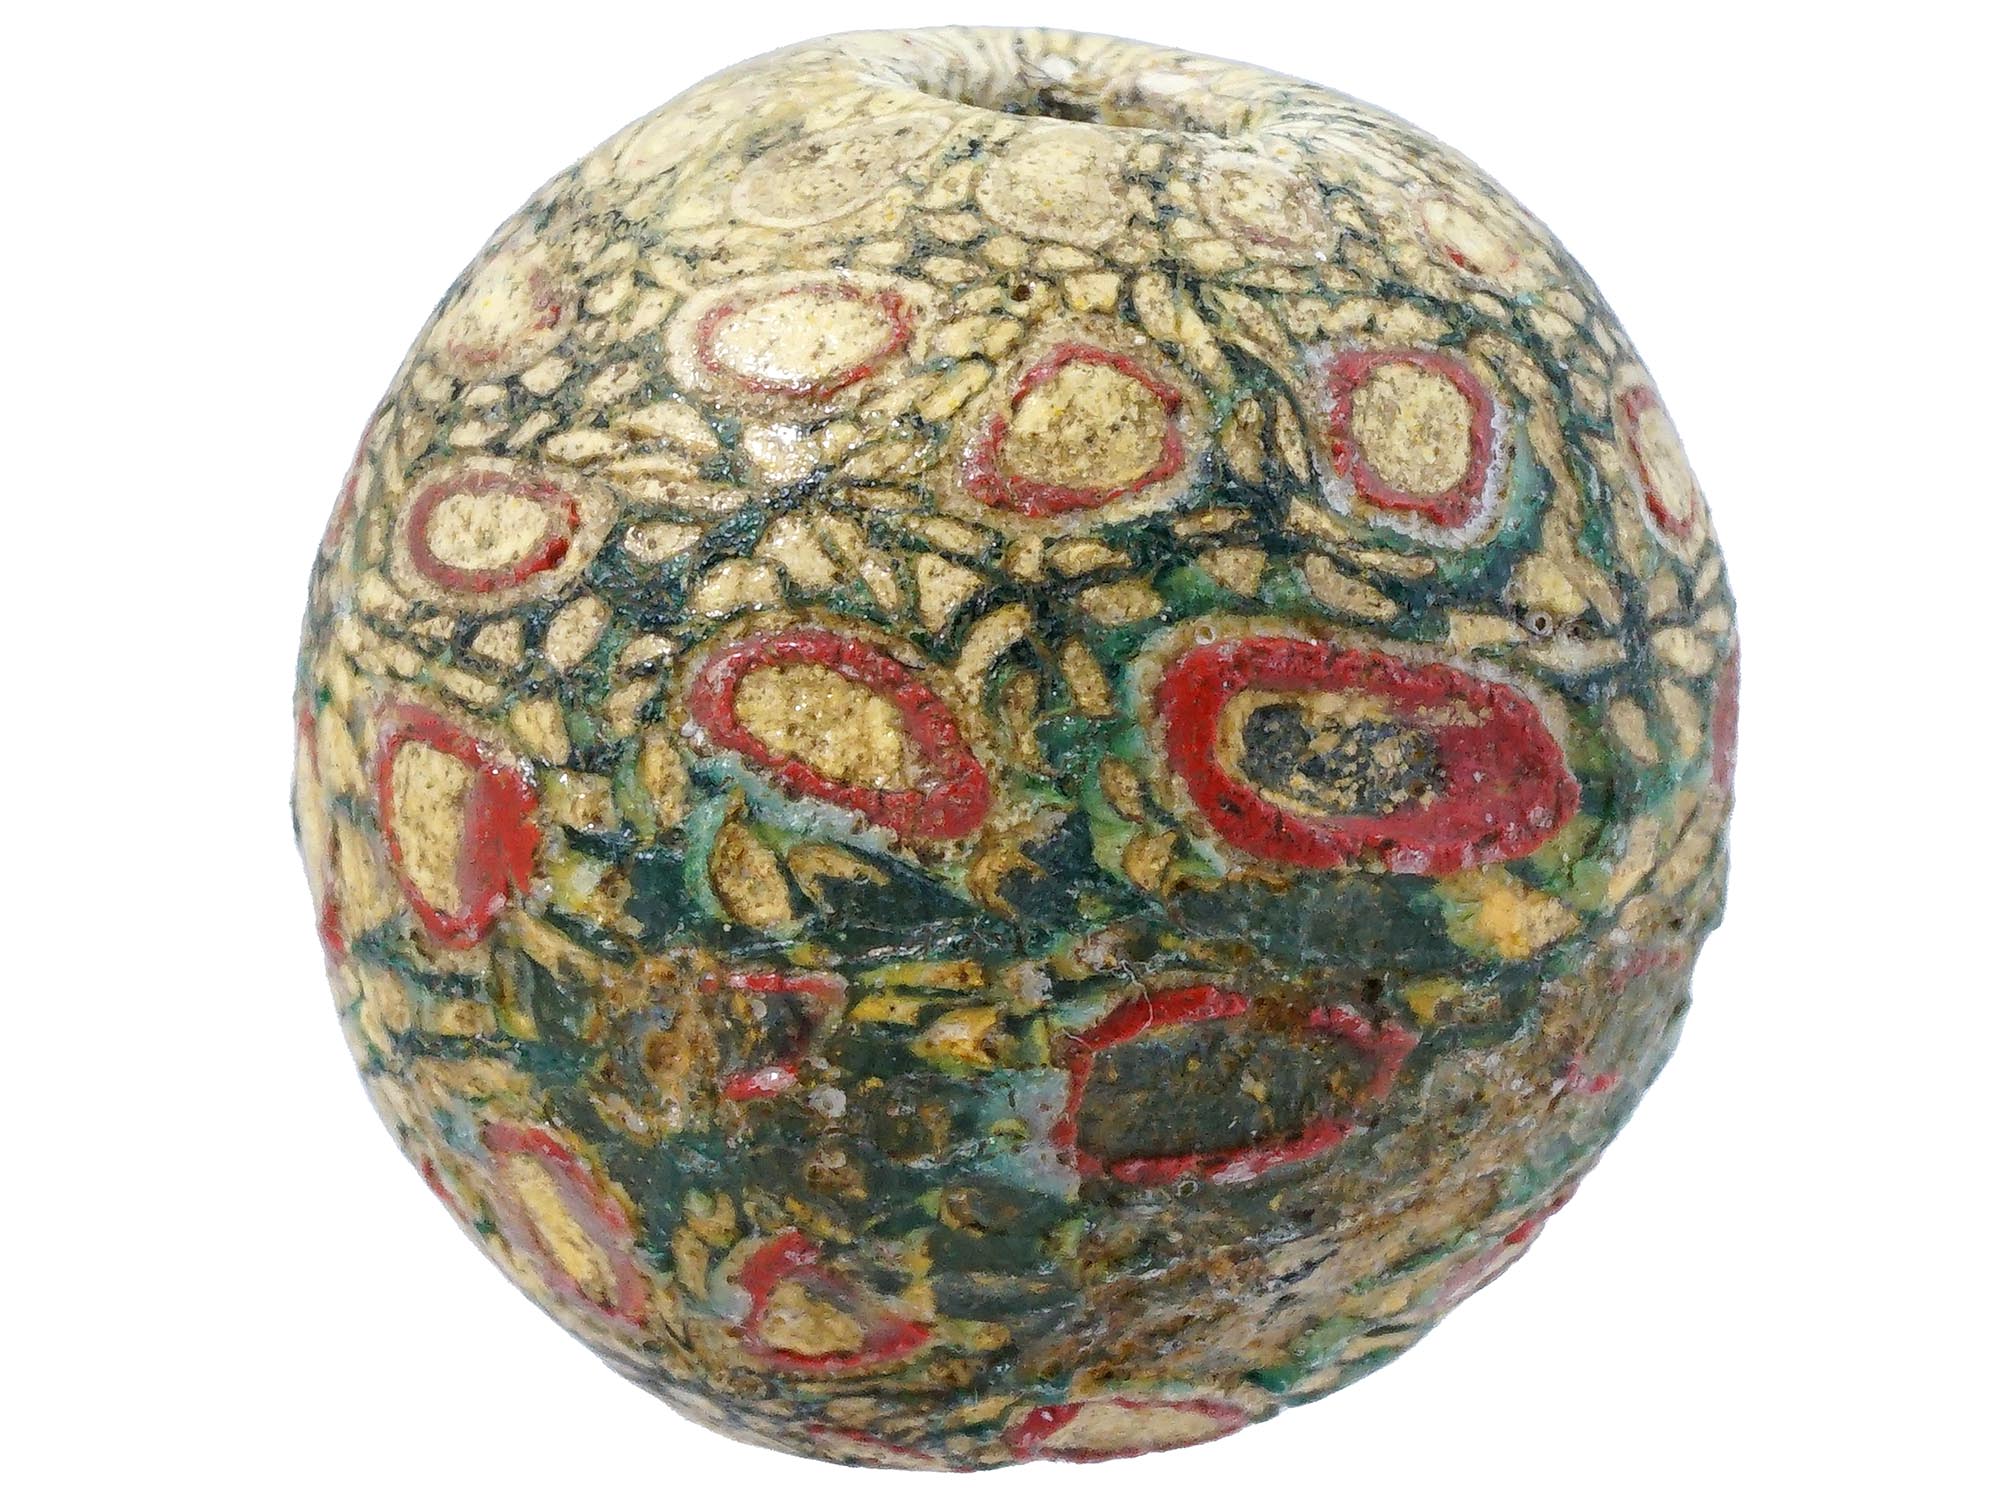 LARGE ANCIENT ROMAN MILLEFIORI GLASS BALL SHAPED BEAD PIC-0